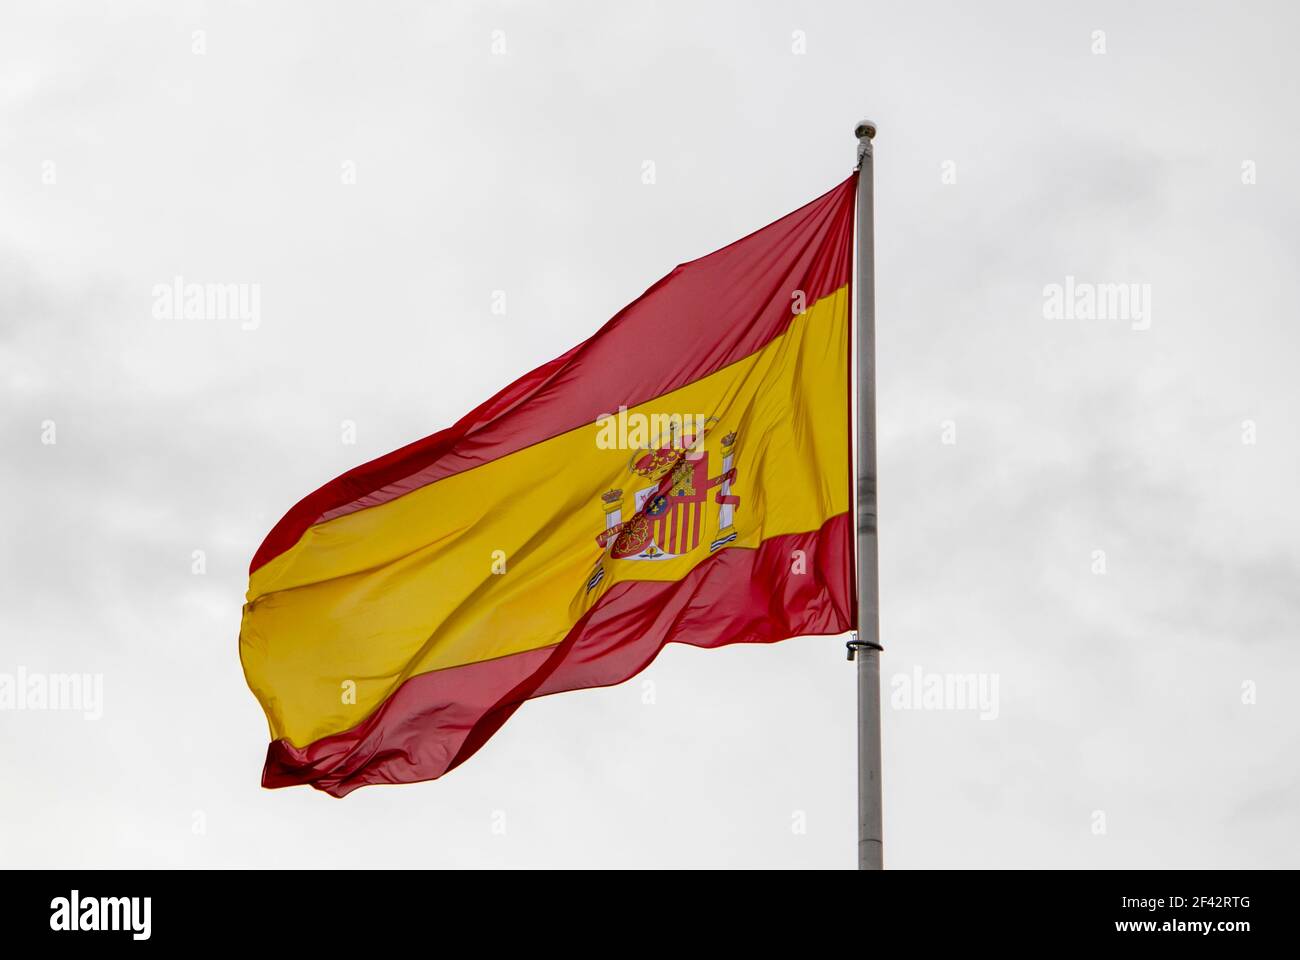 Bandera espana hi-res stock photography and images - Alamy